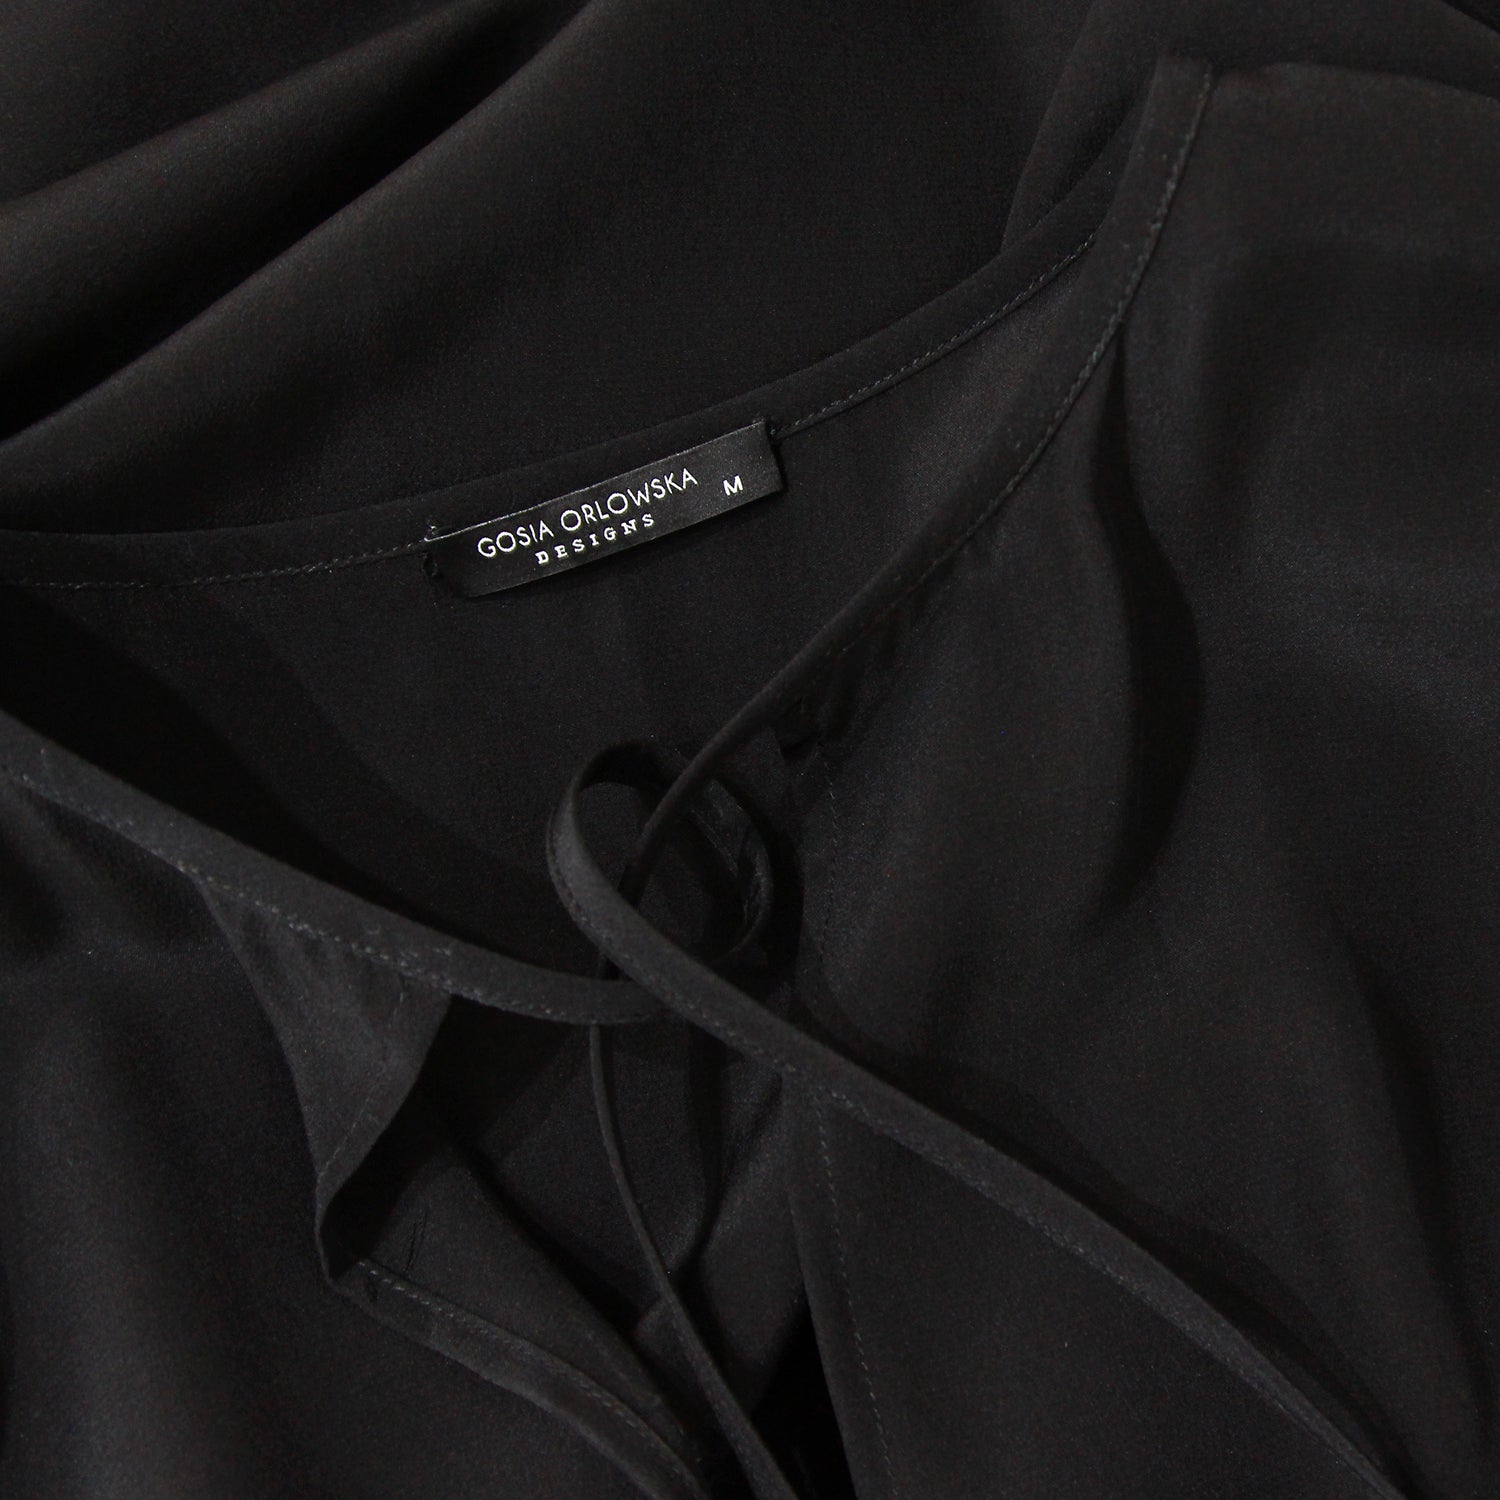 “BALI” Silk Dress - Black